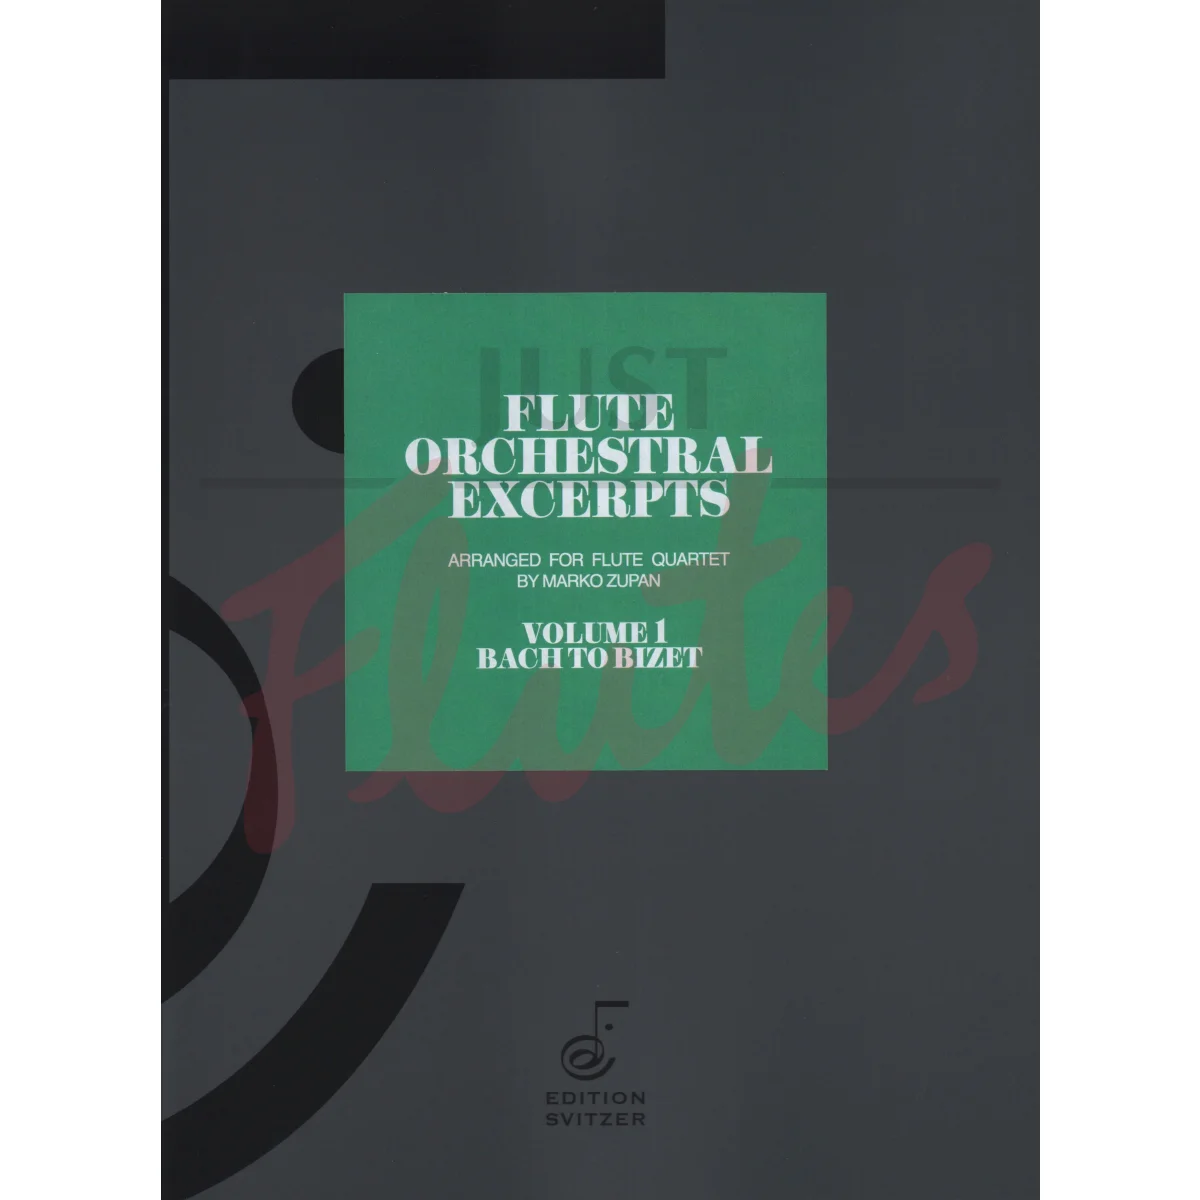 Flute Orchestral Excerpts Volume 1 (arranged for Flute Quartet)